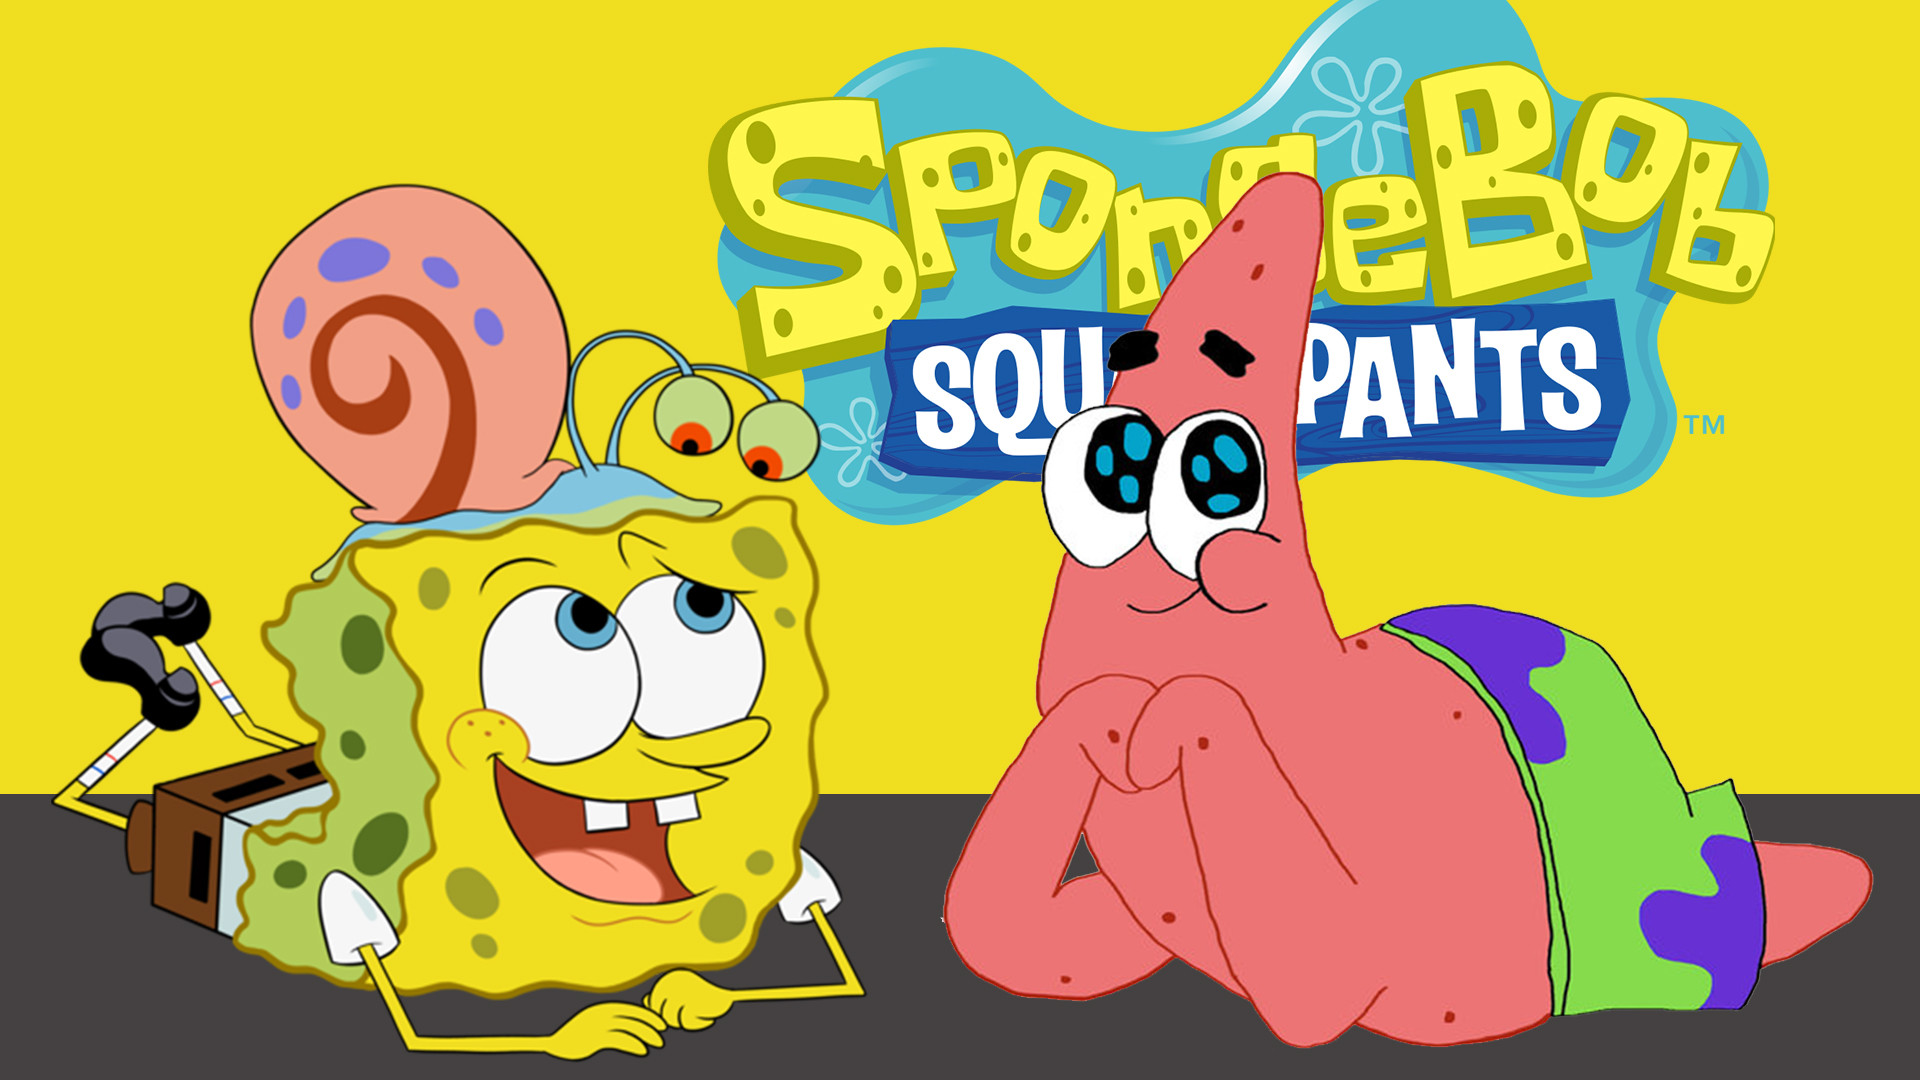 spongebob desktop wallpaper,cartoon,animated cartoon,yellow,text,illustration